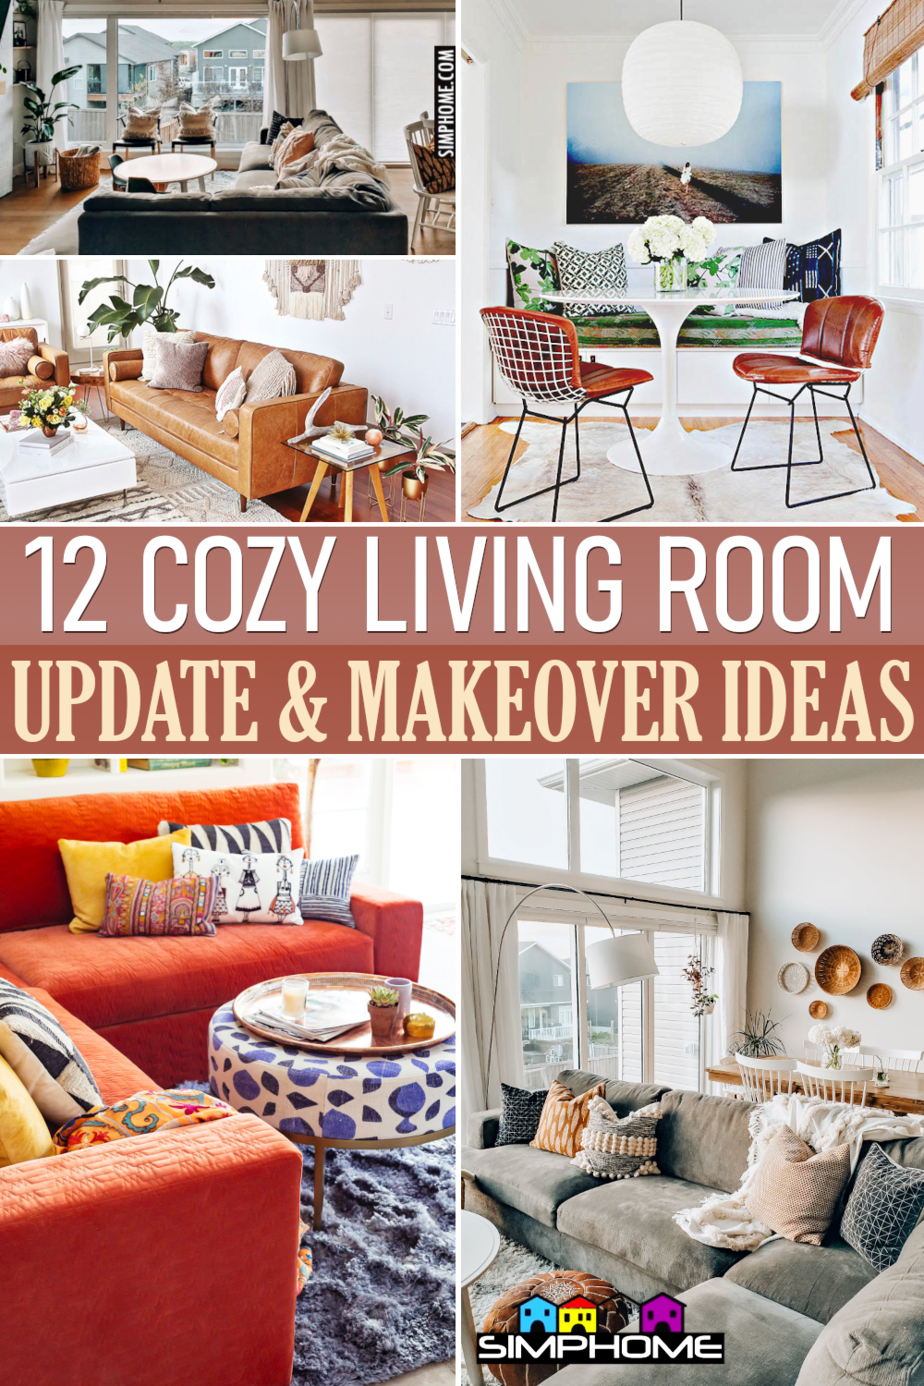 12 cOZY Living room Ideas via Simphome.comFeatured